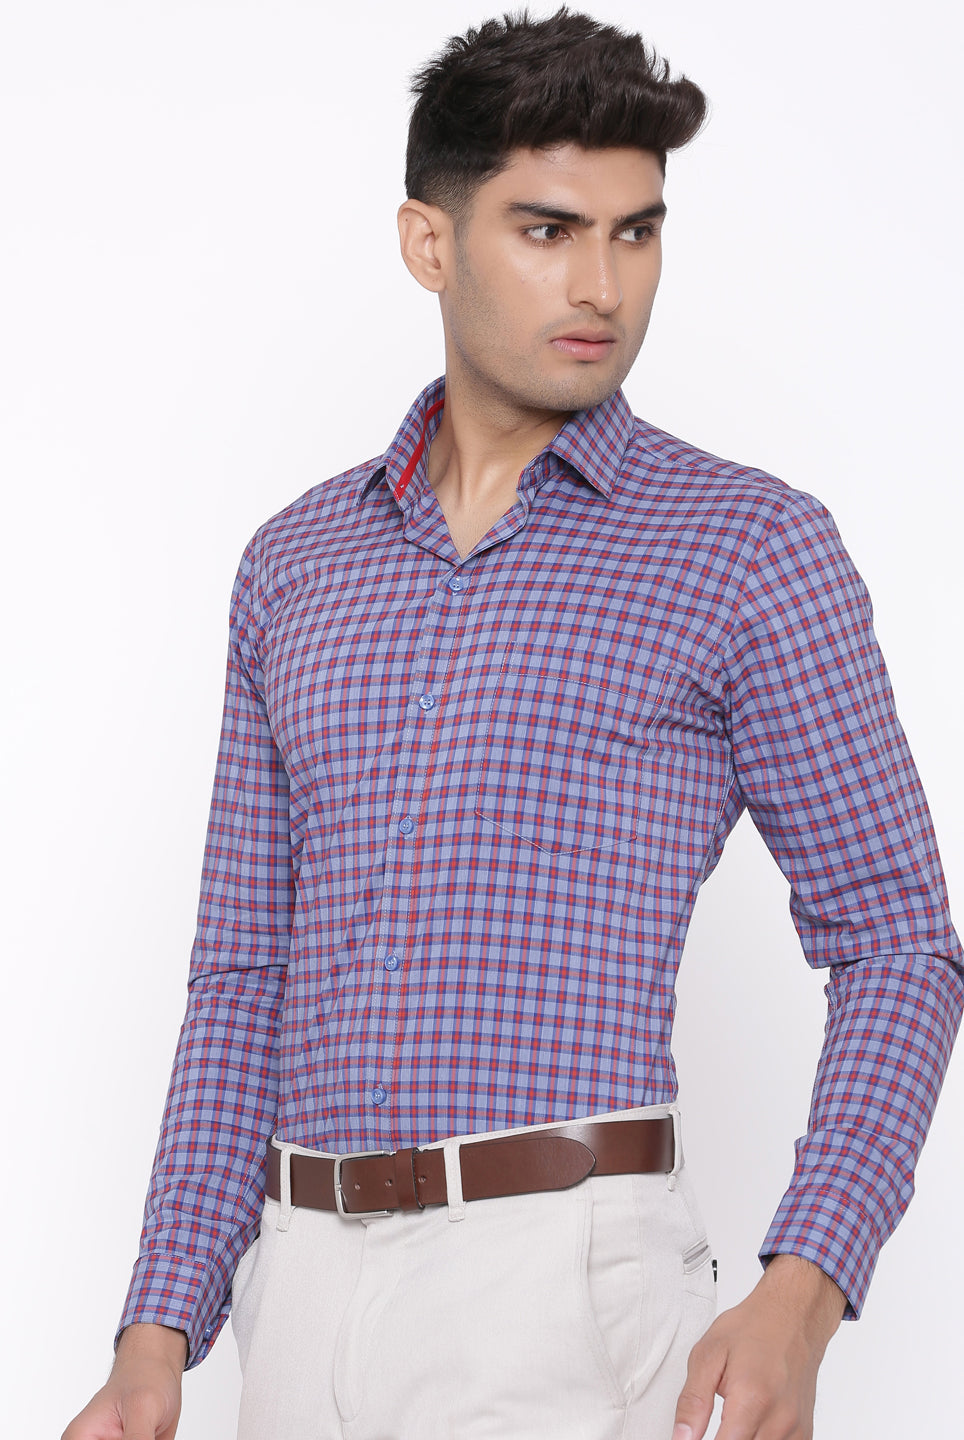 purple check shirt